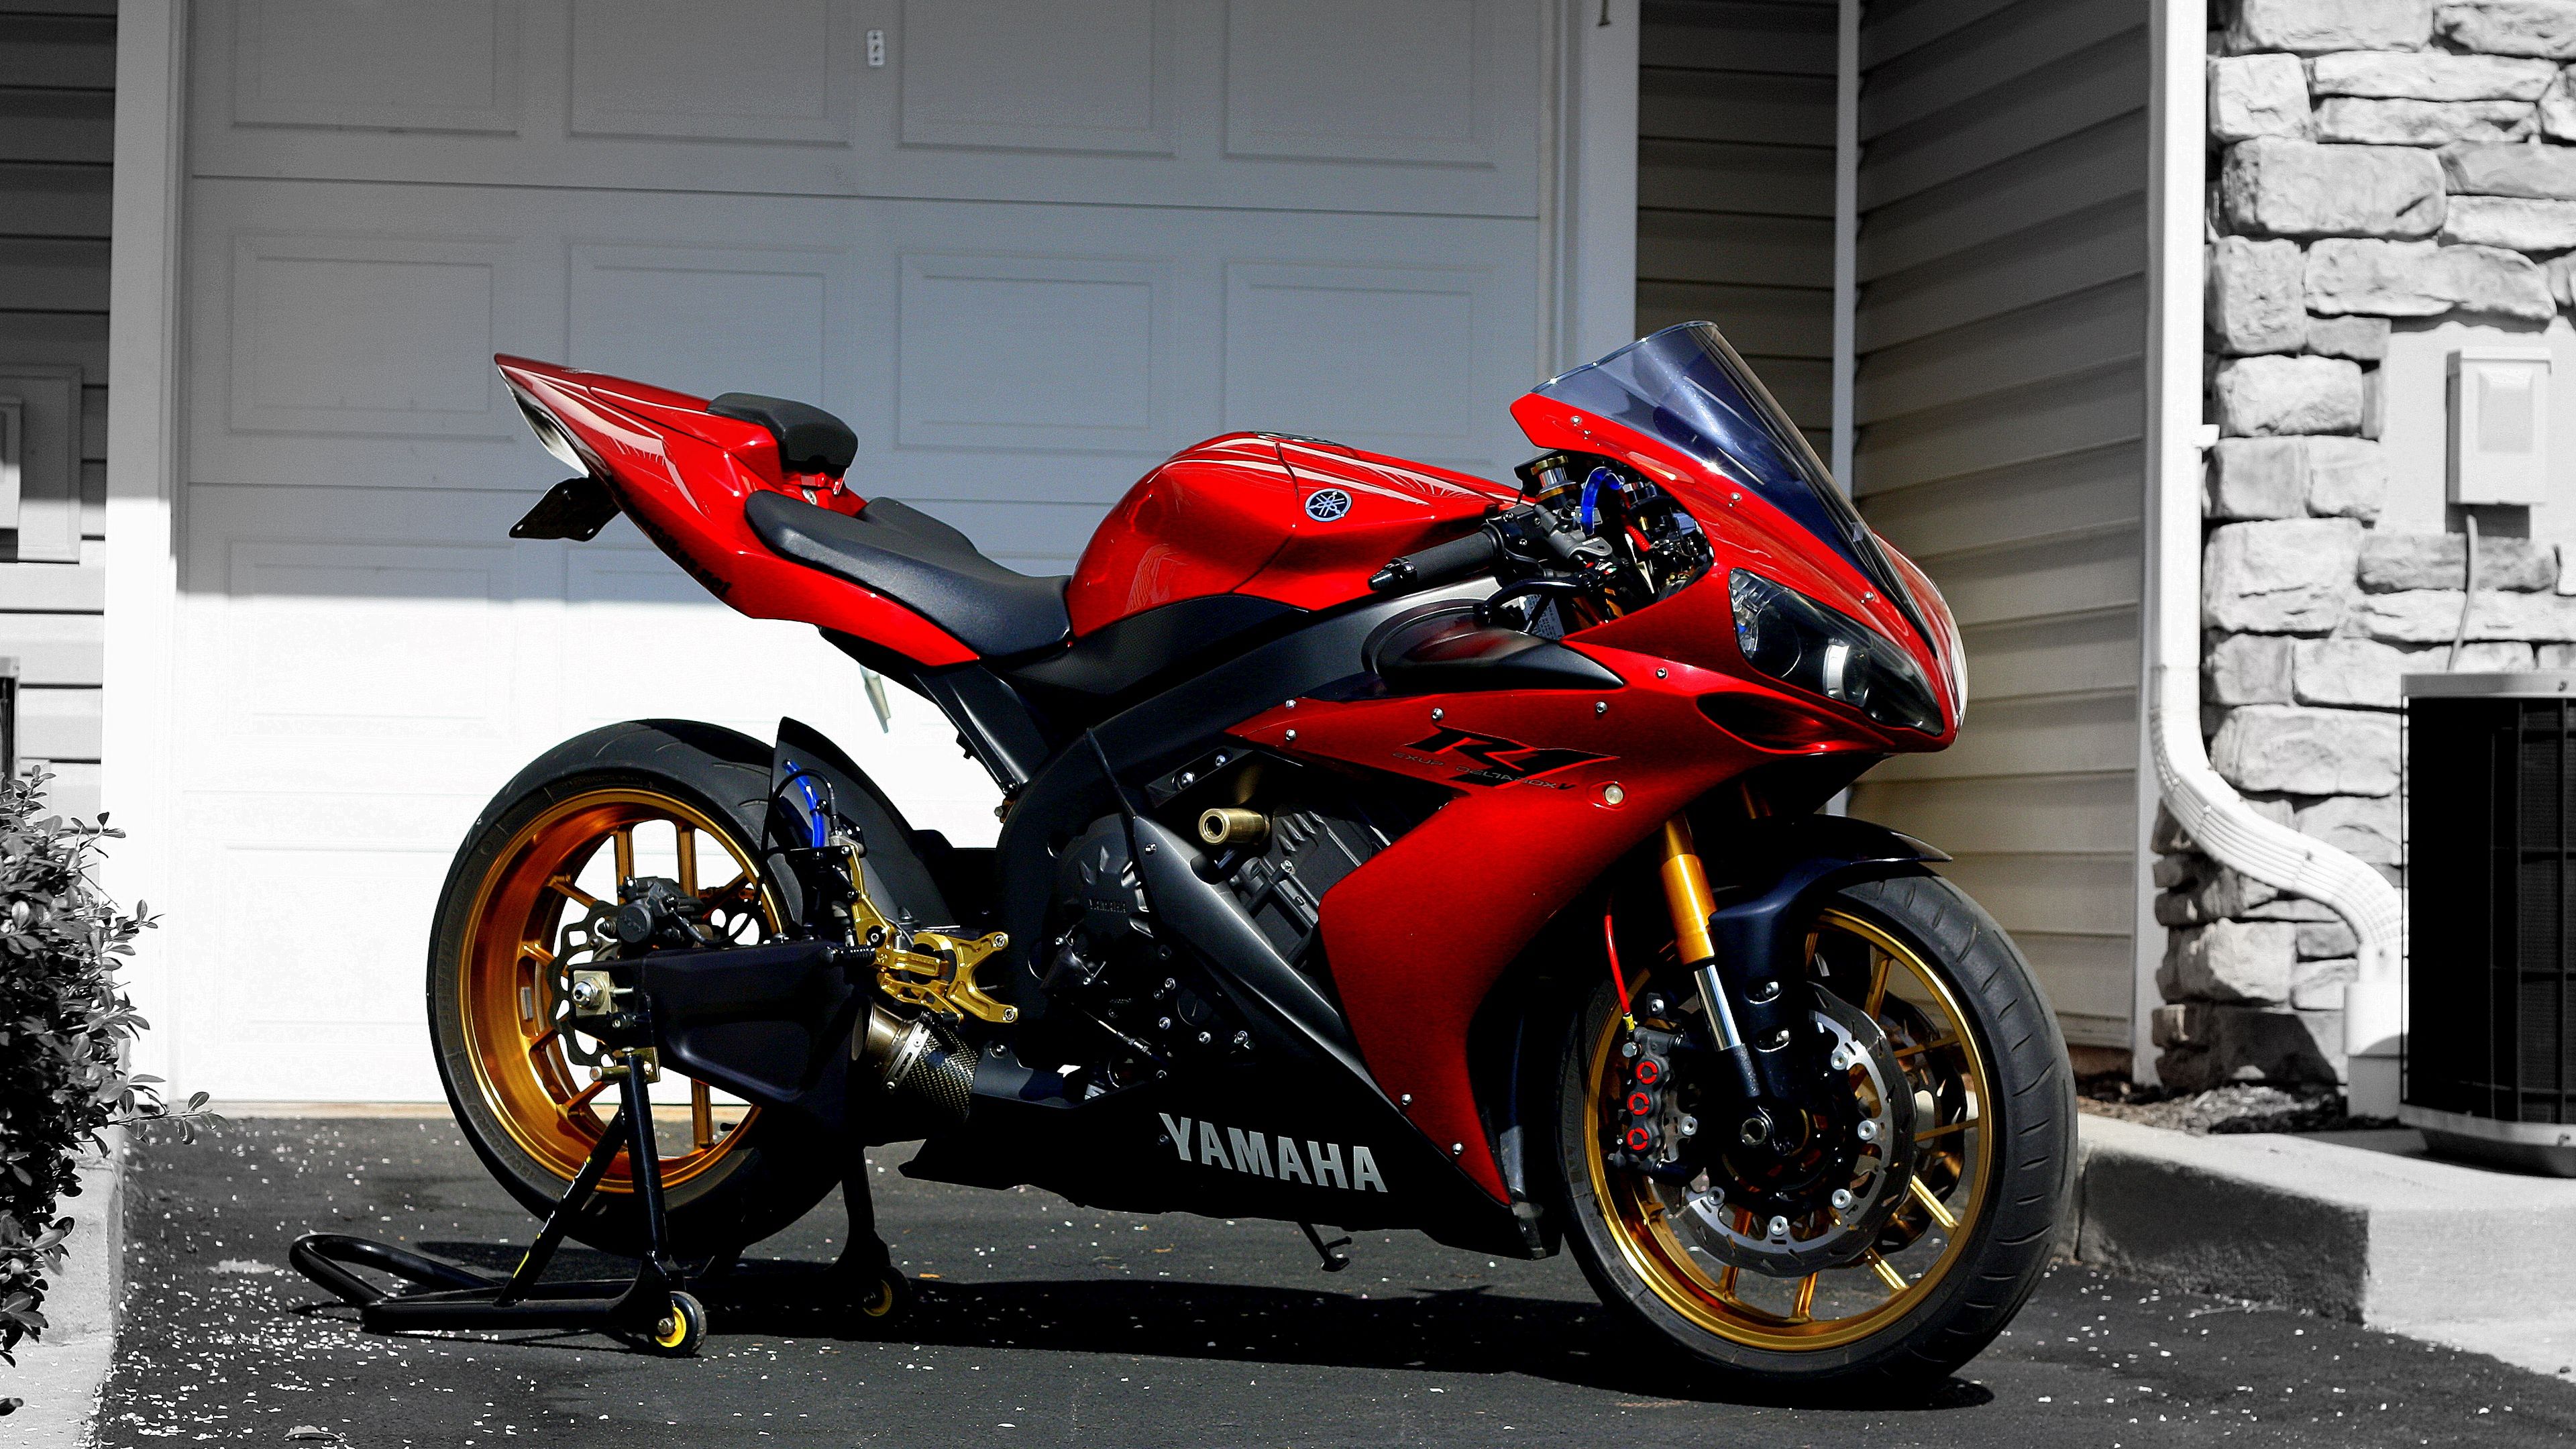 Yamaha Red Motorcycle Wallpapers